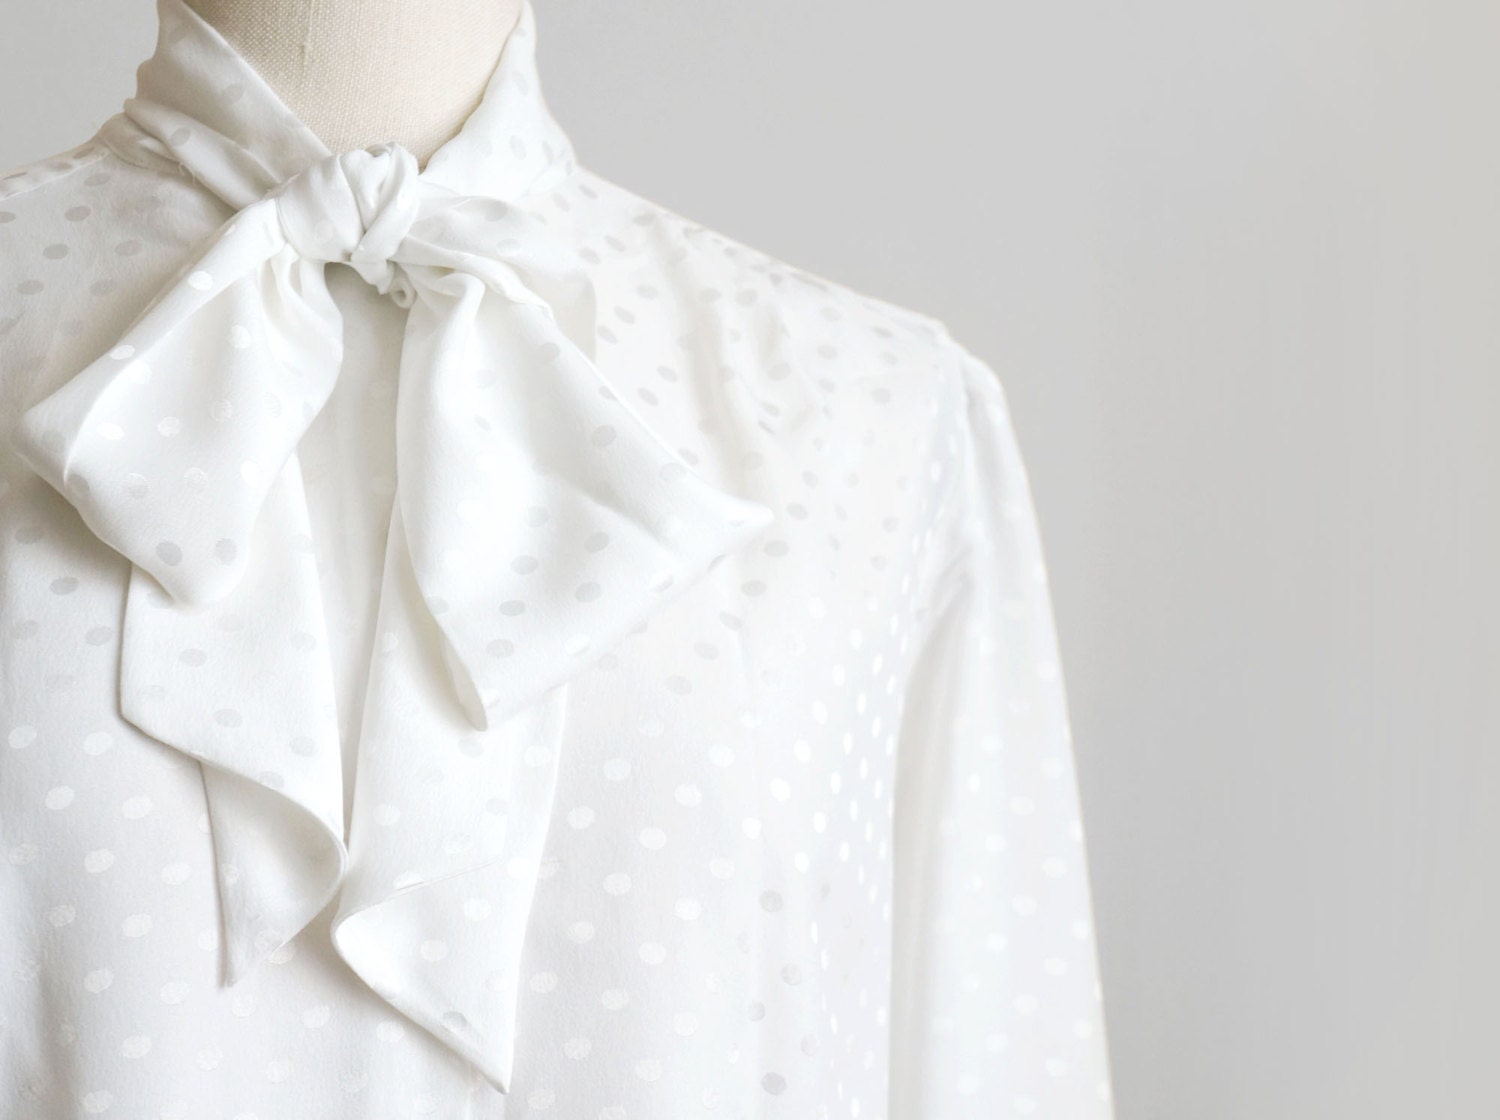 SALE Vintage womens white polka dot shirt in secretary style, white long sleeve geometric shirt with bow tie - plot